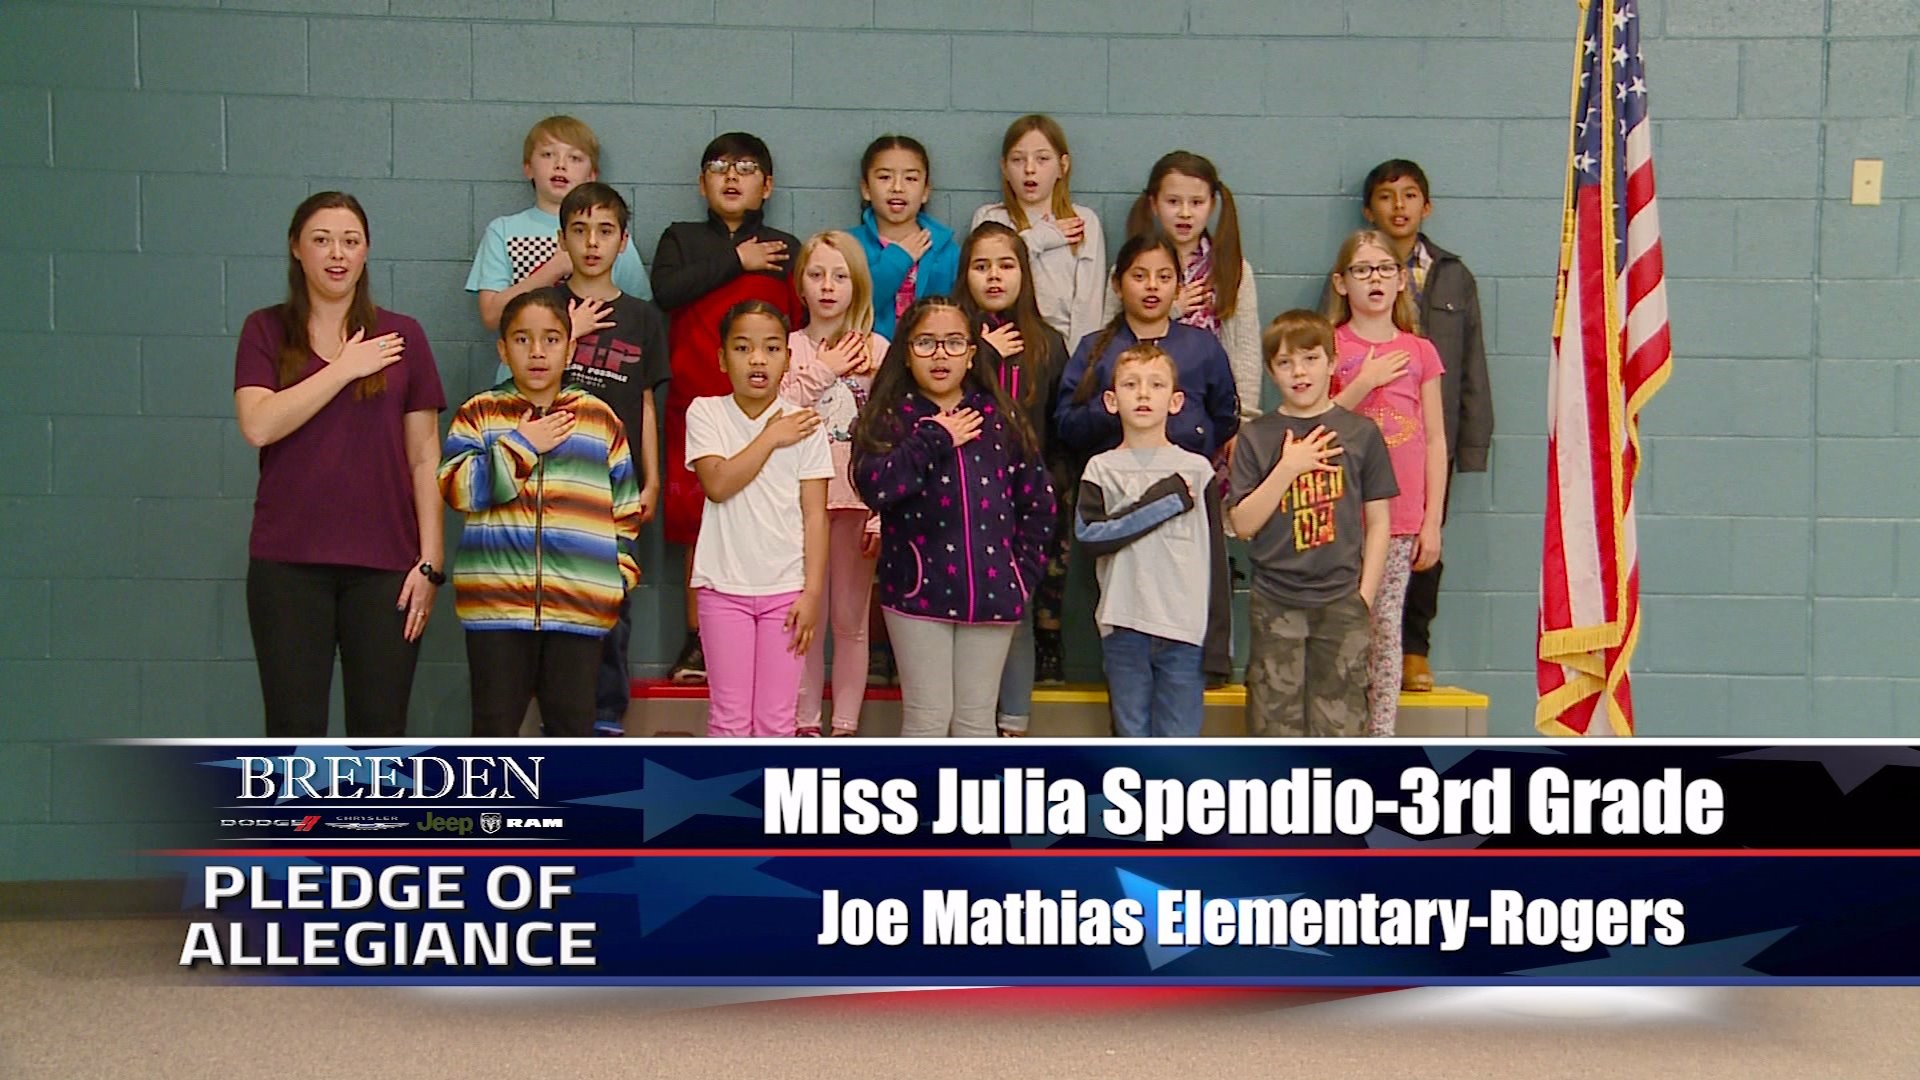 Miss Julia Spendio  3rd Grade Joe Mathias Elementary, Rogers